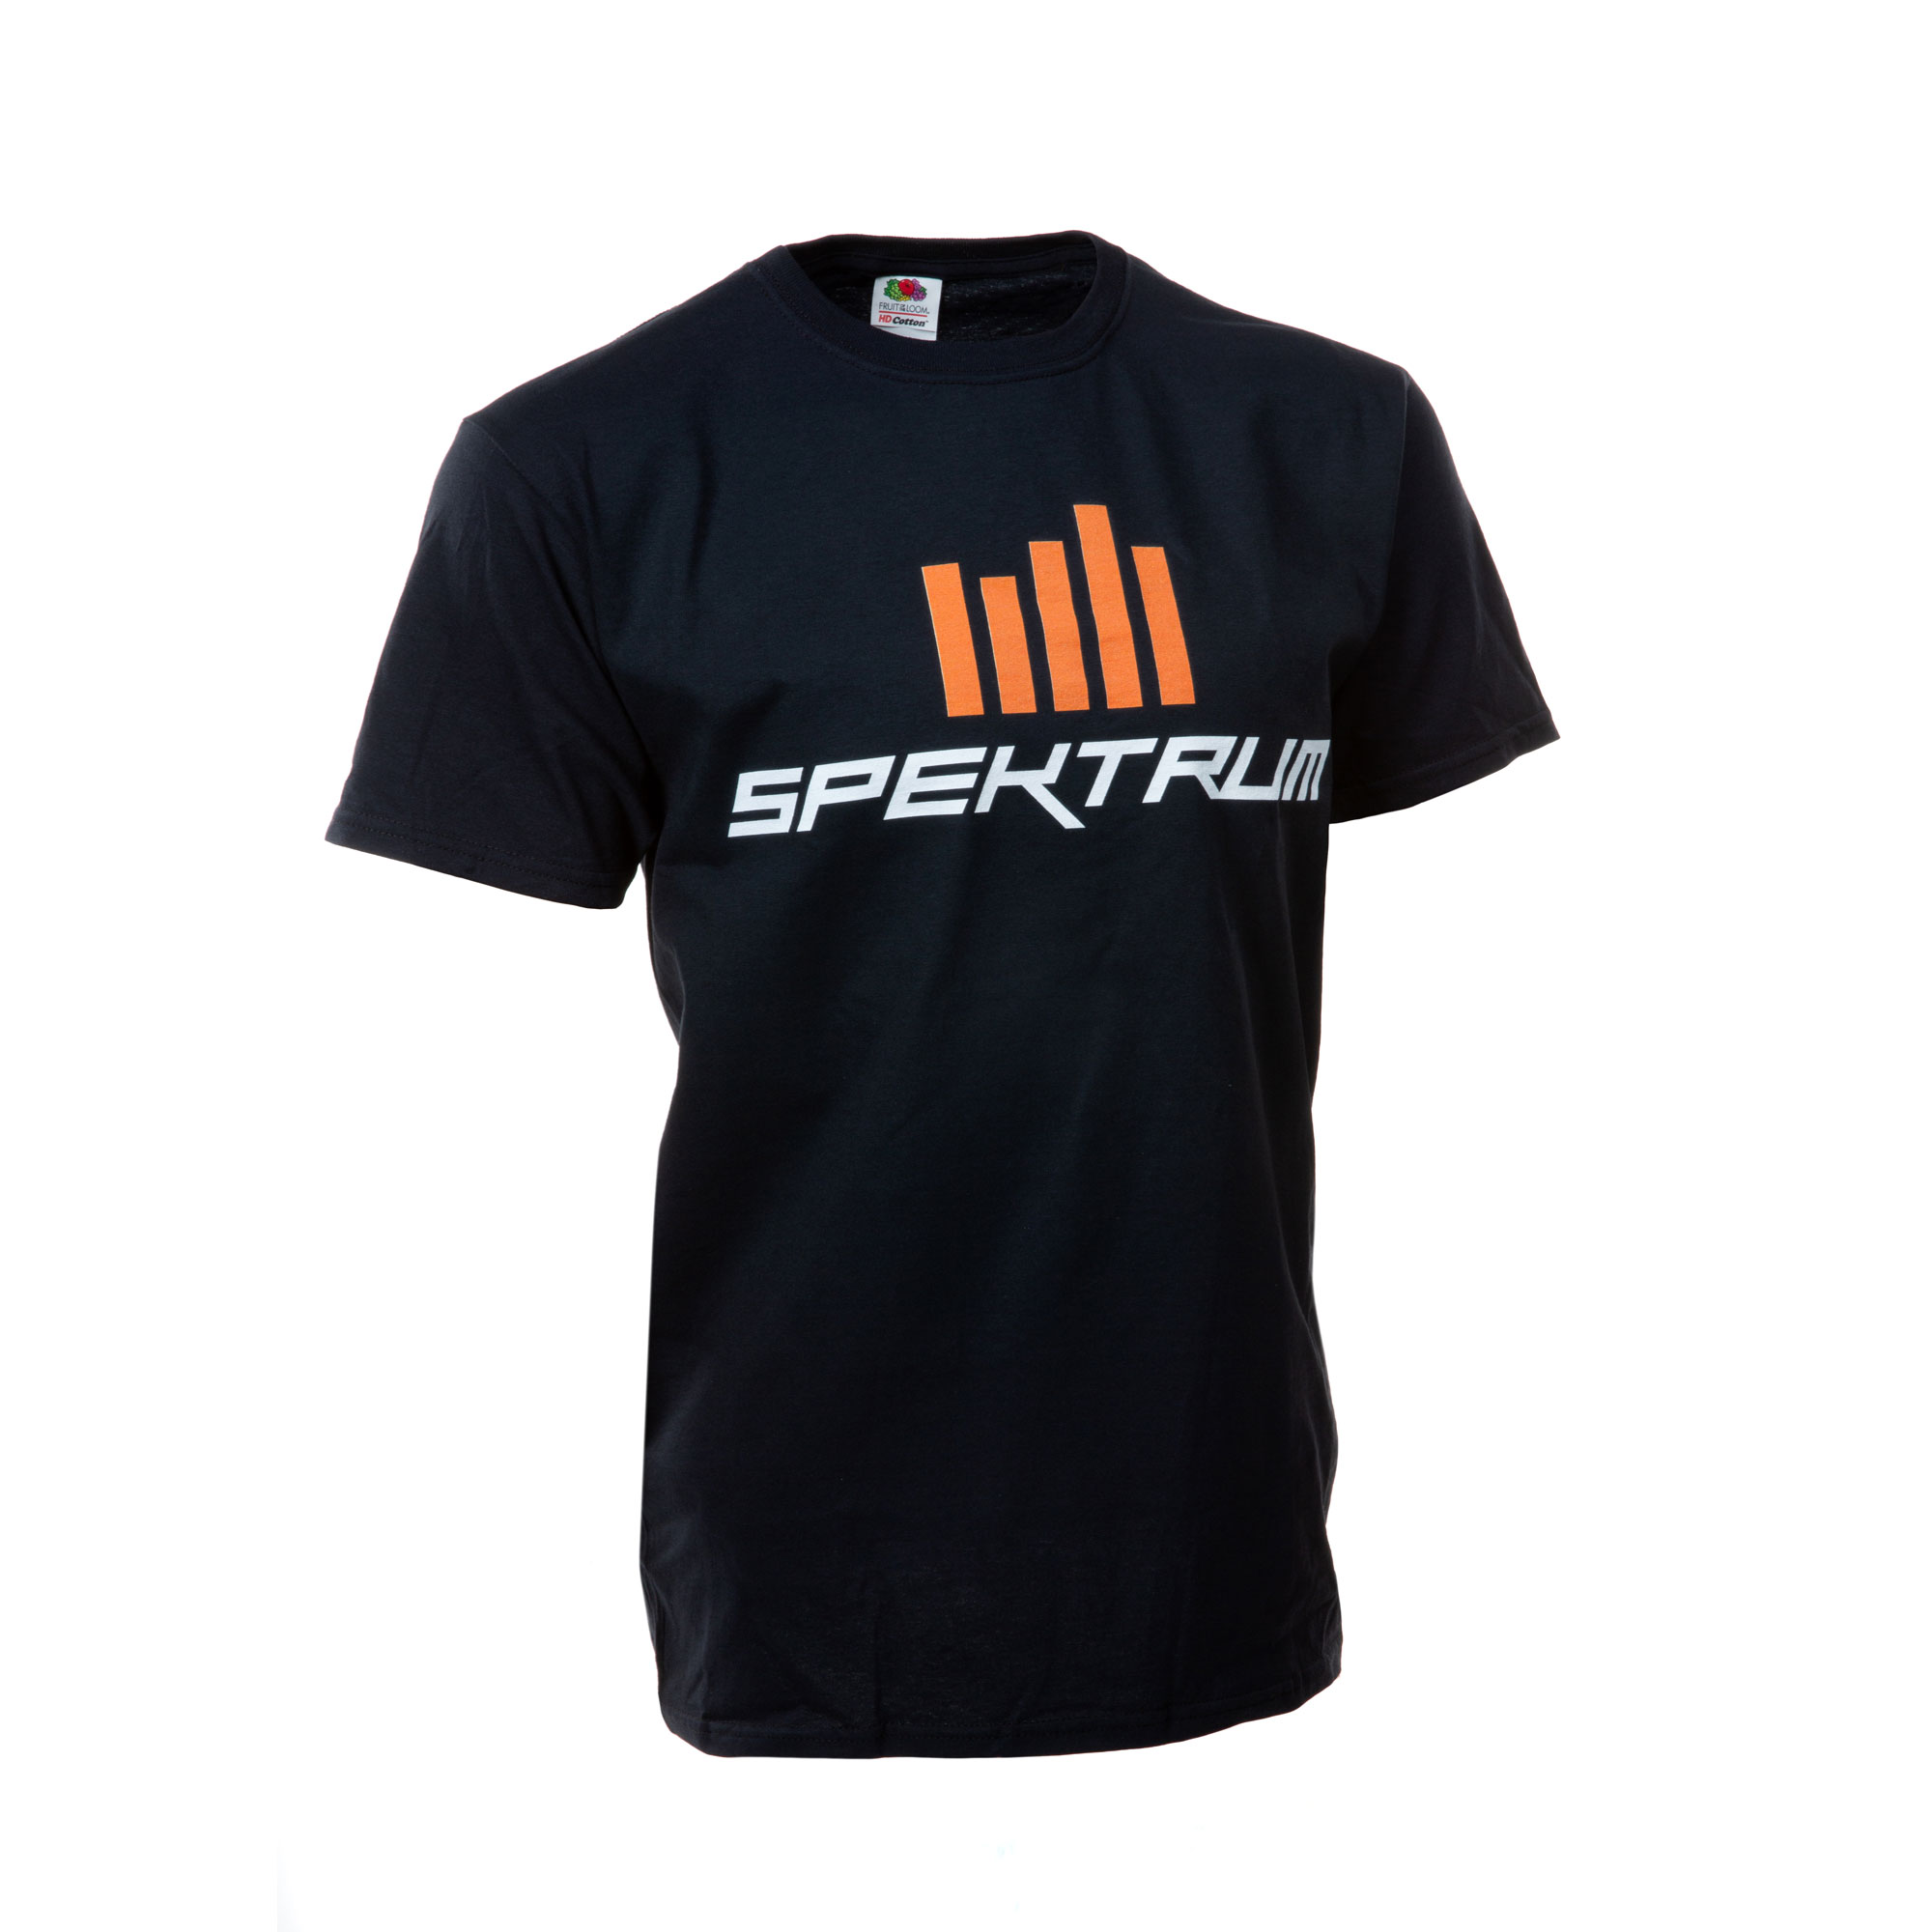 Spektrum Spektrum Men's T-Shirt Small | eBay